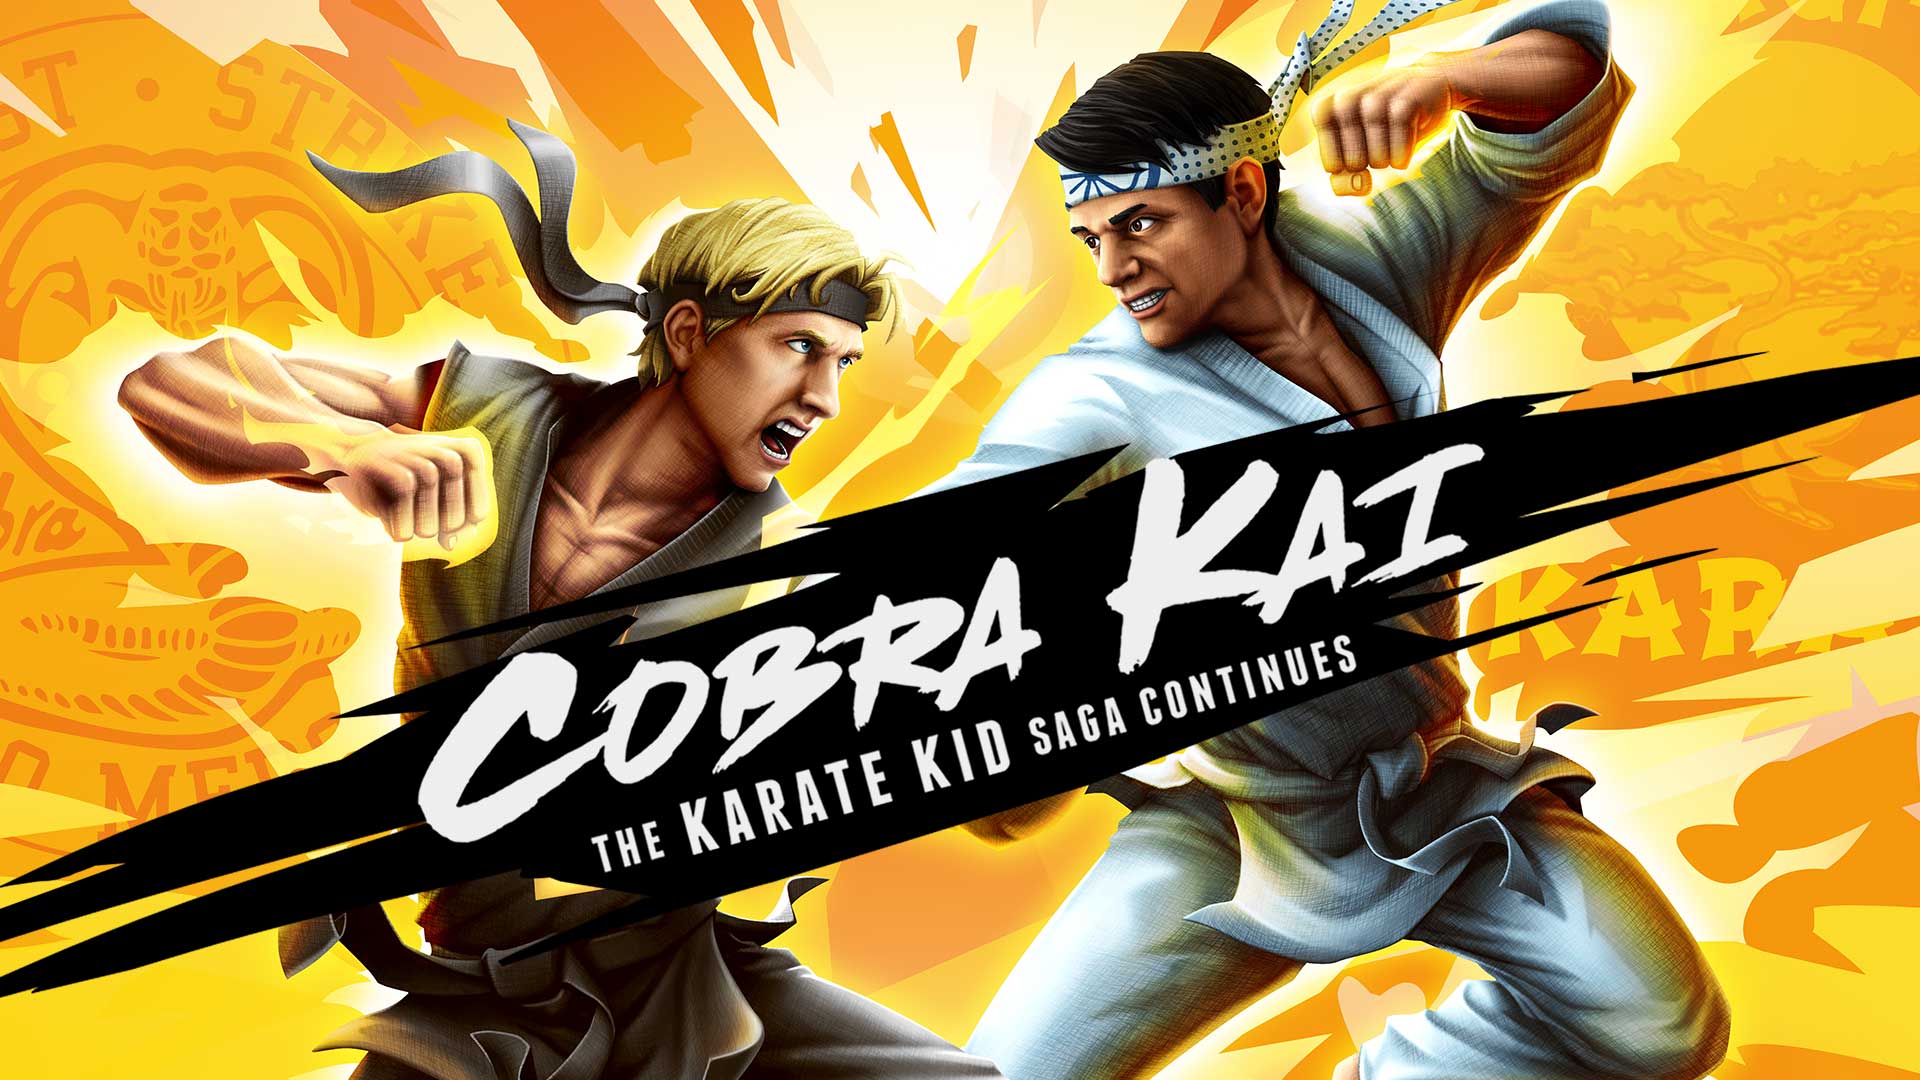 Initial Review: Cobra Kai. So I watched all of Cobra Kai last